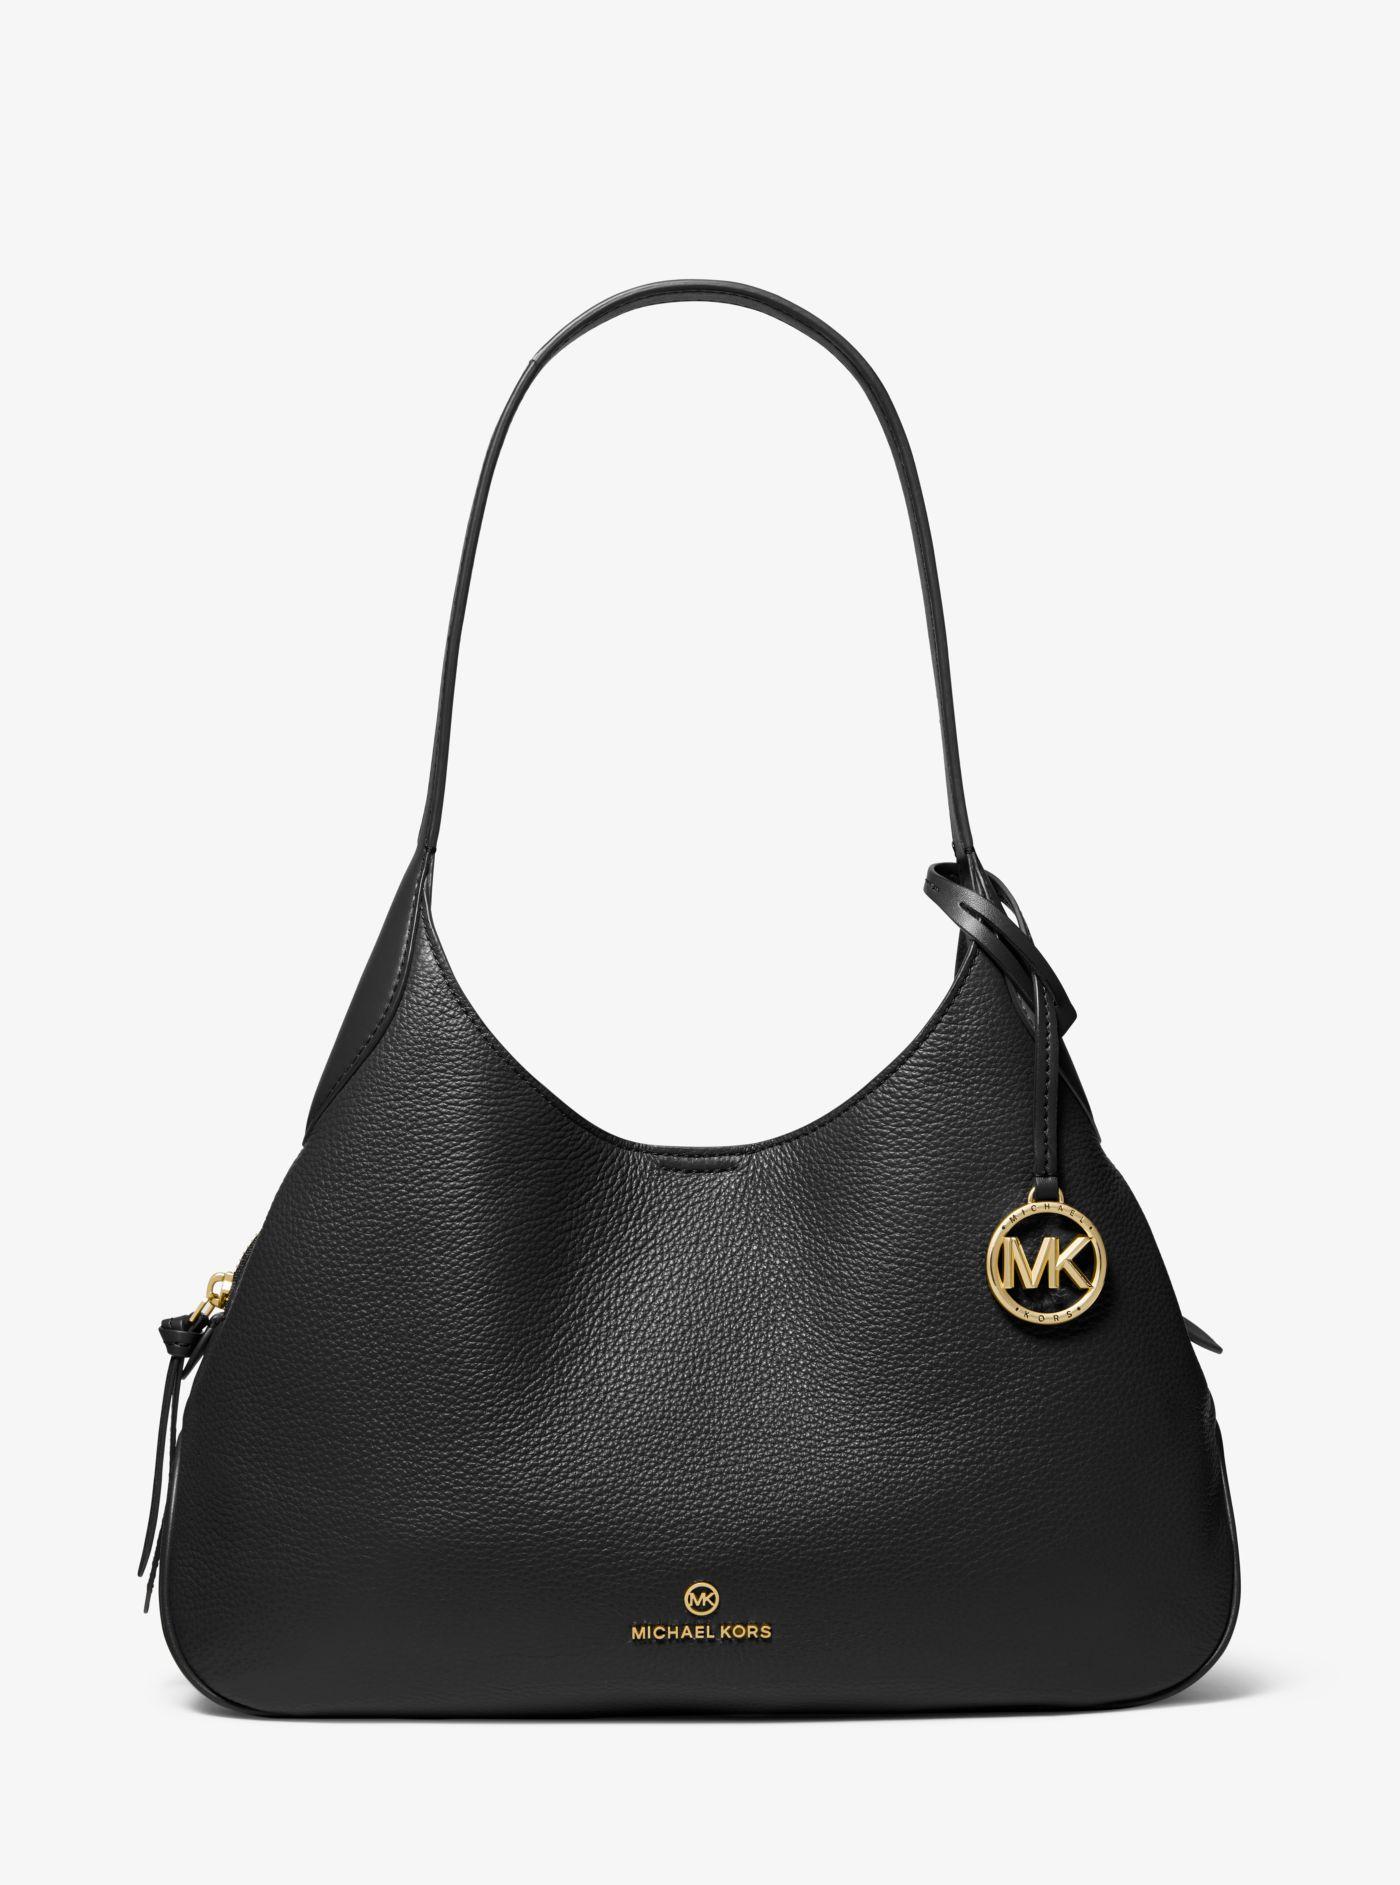 Aprender acerca 86+ imagen michael kors black leather purse - Abzlocal.mx